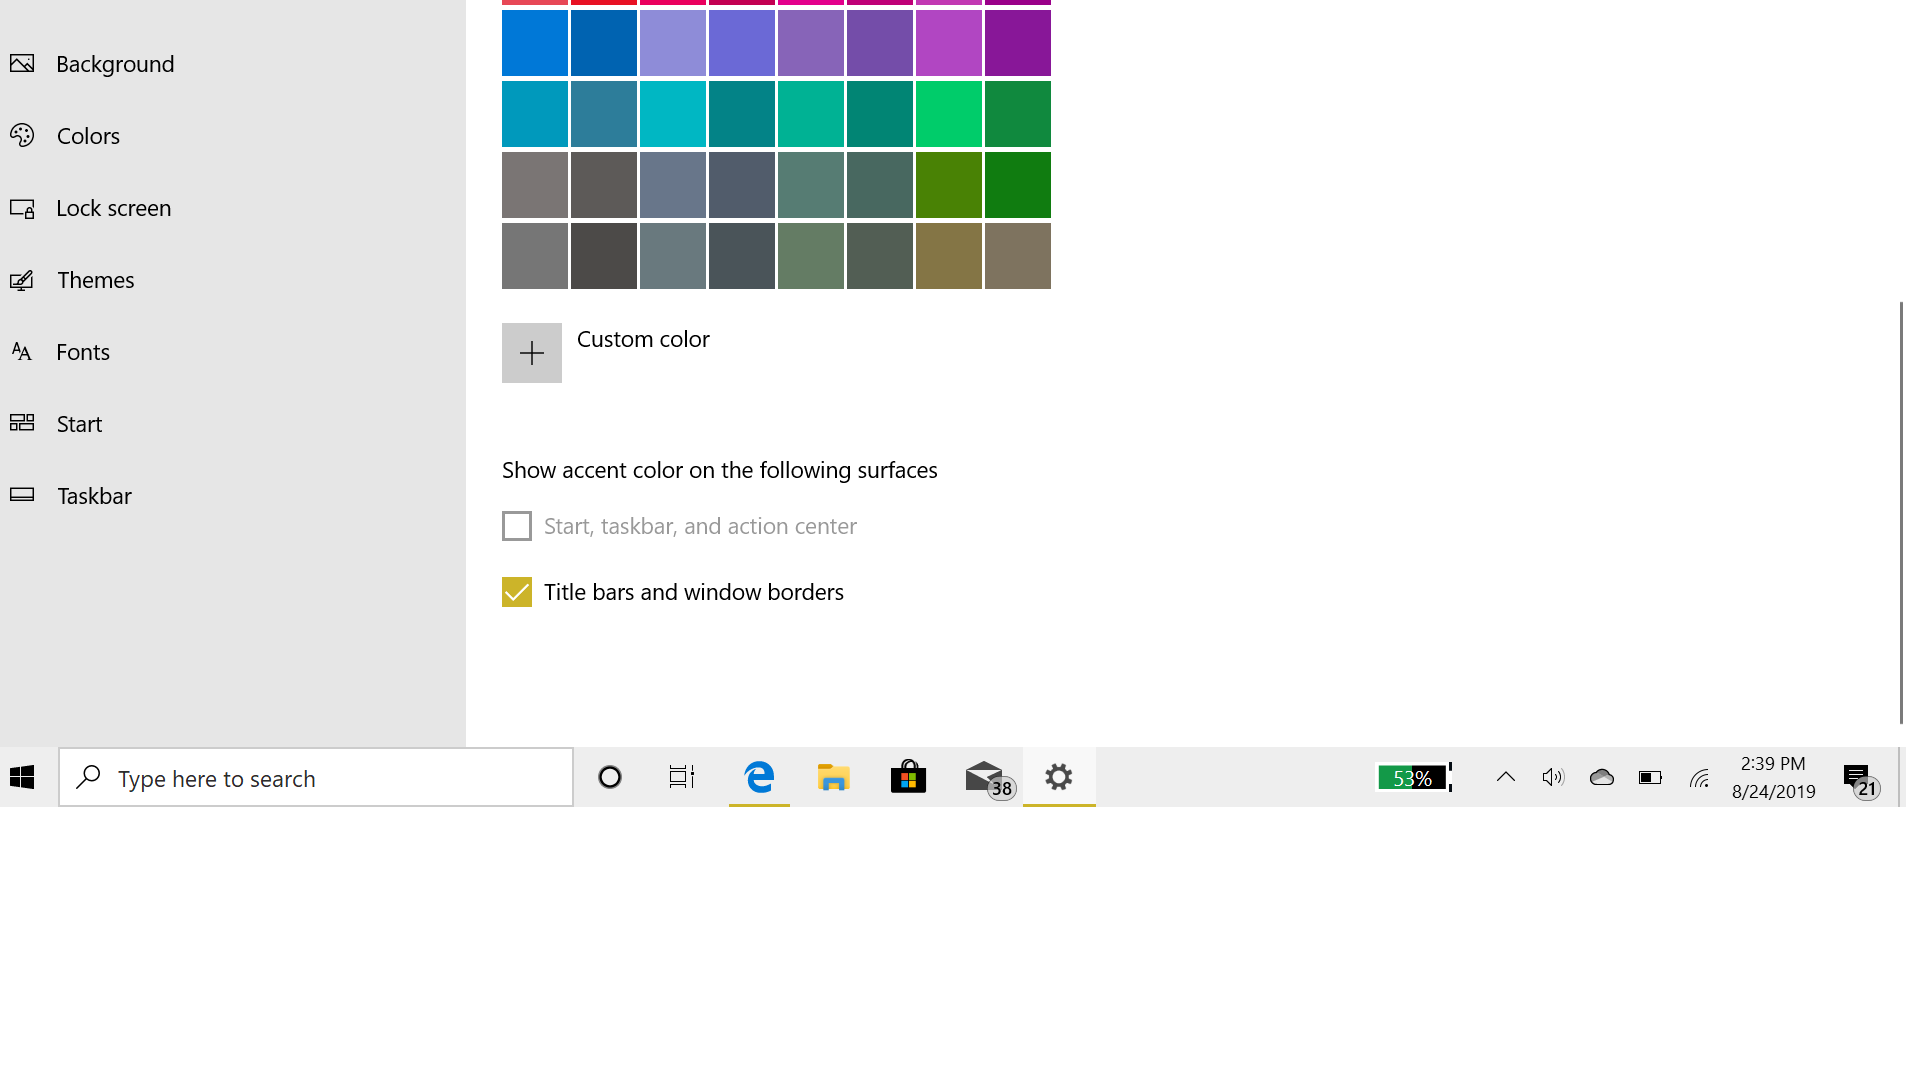 Taskbar Color is white-will not change 7c710111-4c90-4cd9-98ec-404658120ed1?upload=true.png